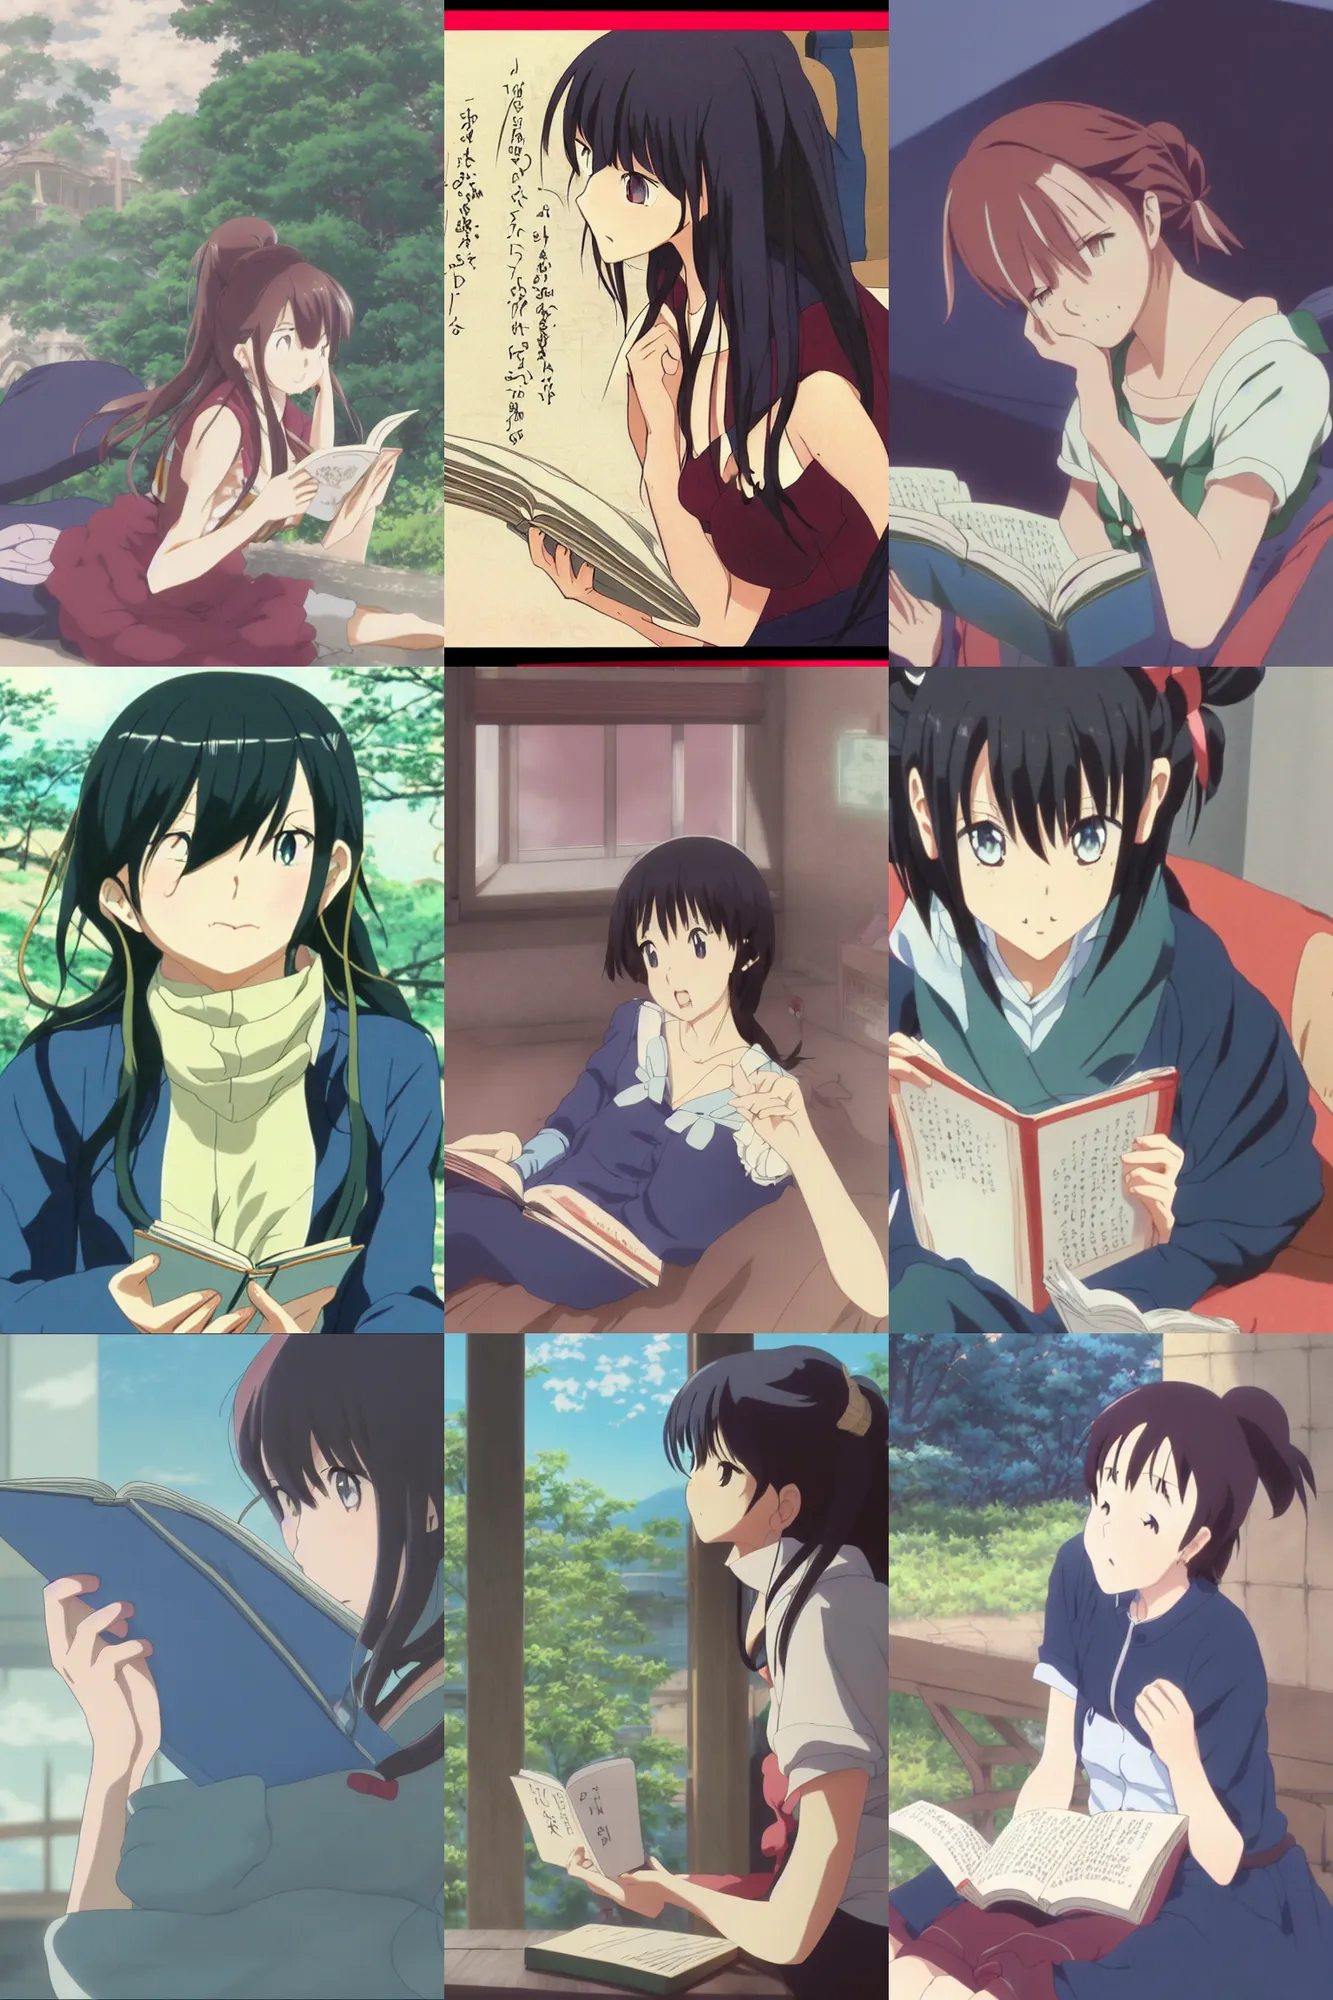 Prompt: anime visual portrait of a cute girl reading, film still from anime by [ [ [ yoshitoshi abe ] ] ], makoto shinkai, crisp, cel shaded